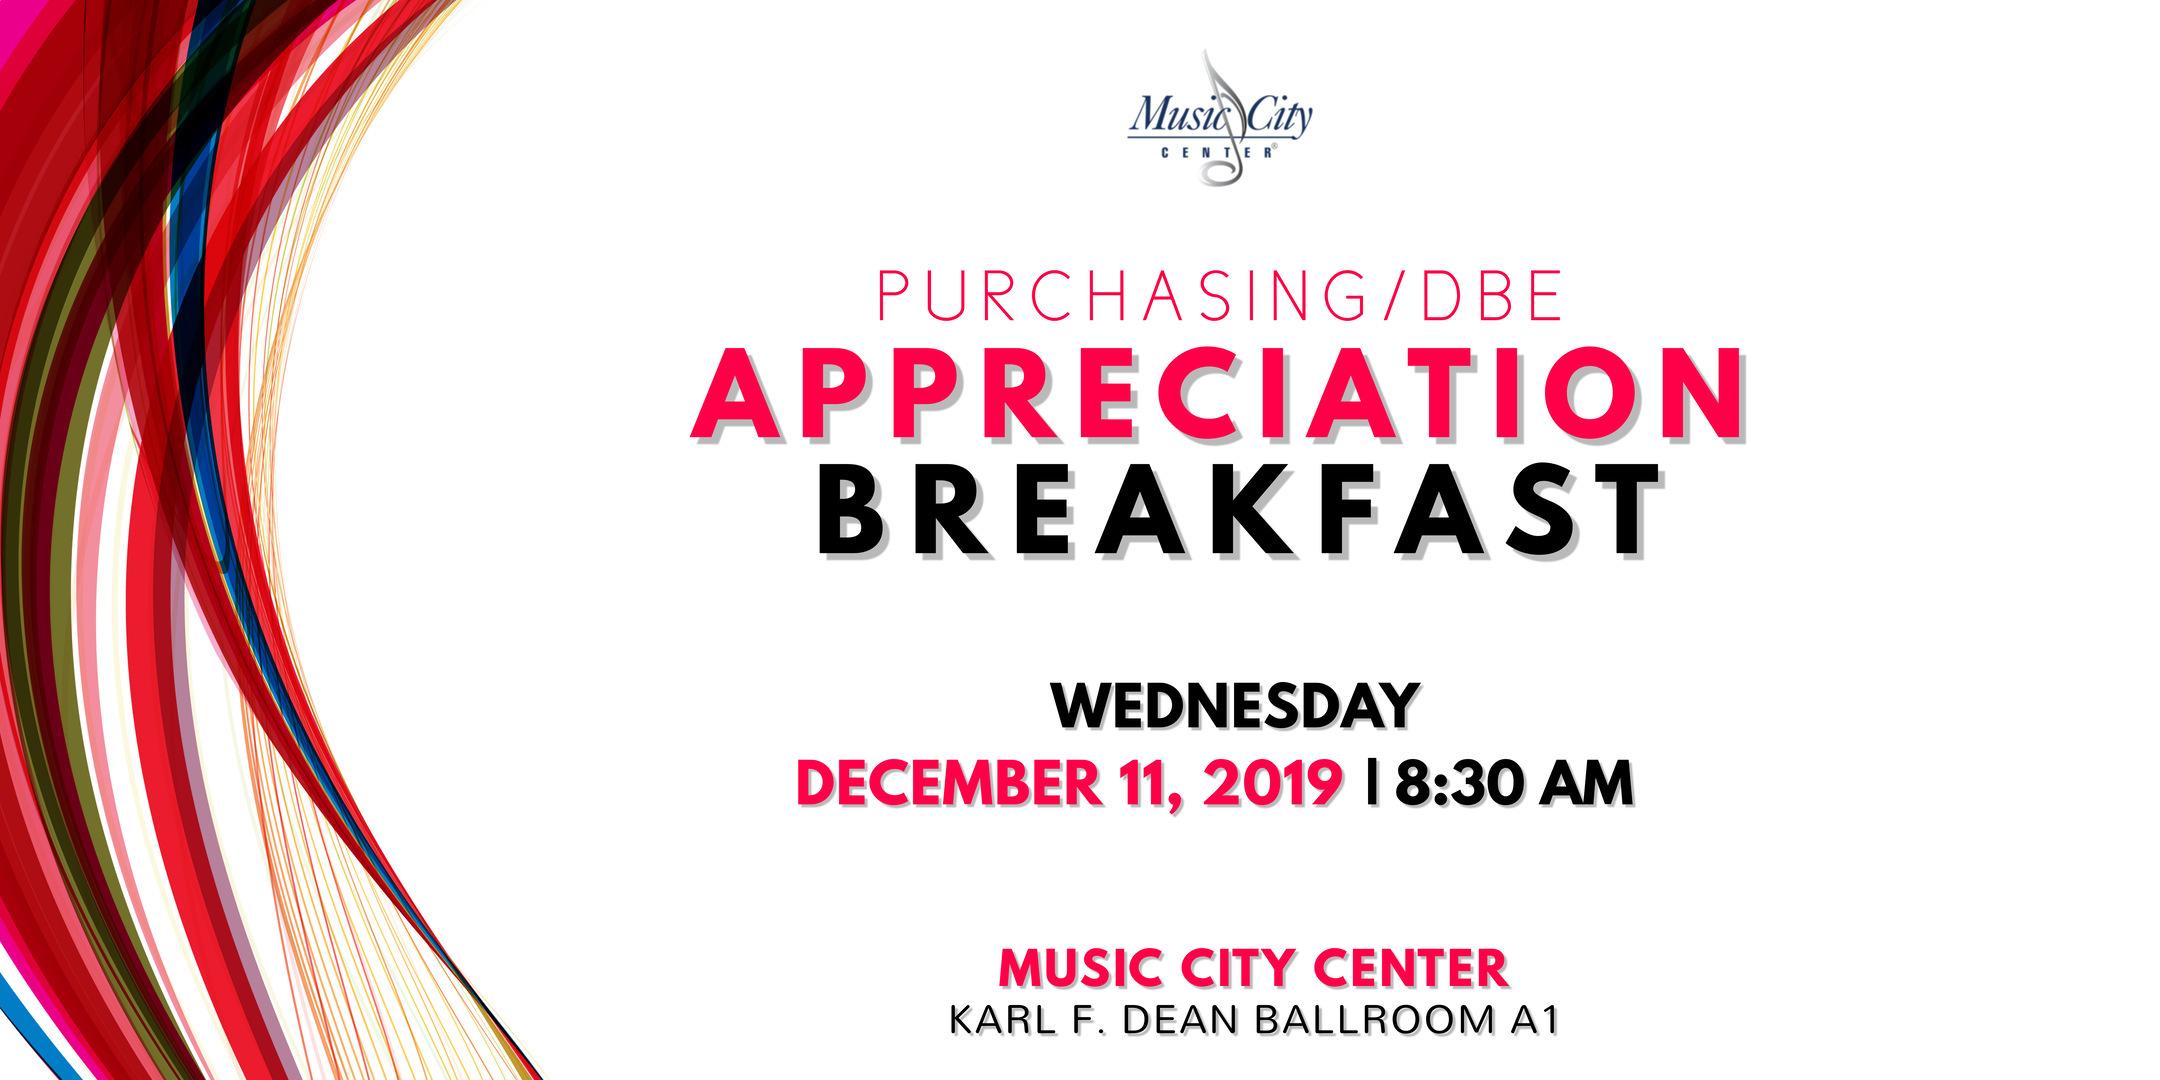 2019 Purchasing/DBE Appreciation Breakfast 